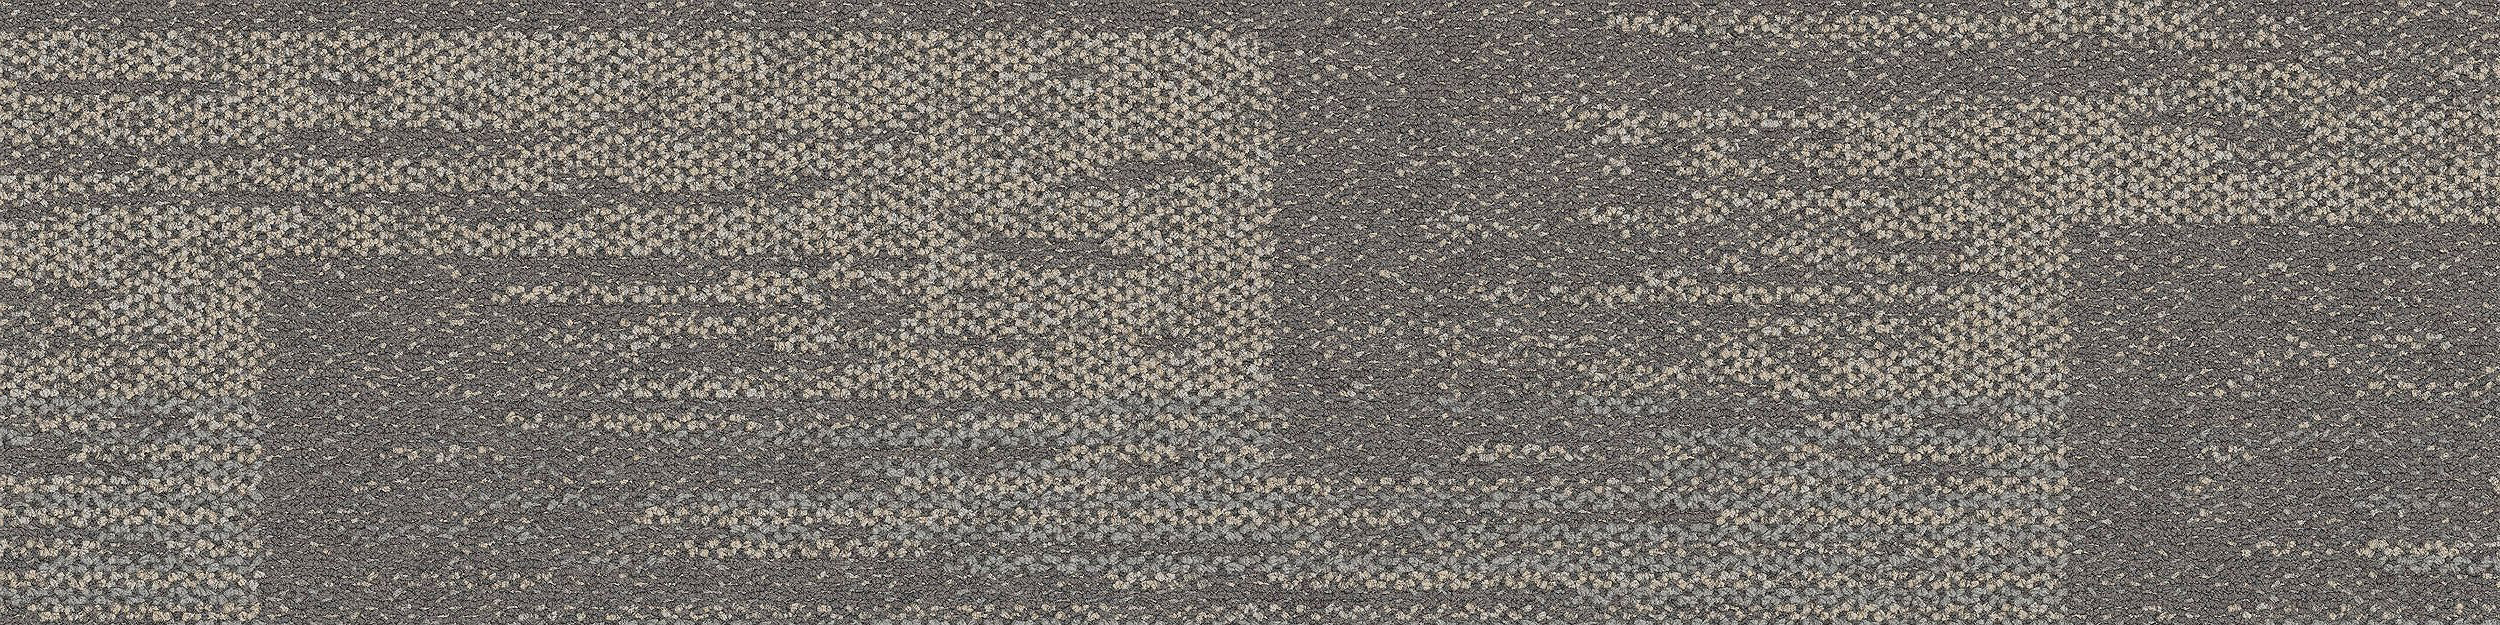 AE311 Carpet Tile In Greige imagen número 14